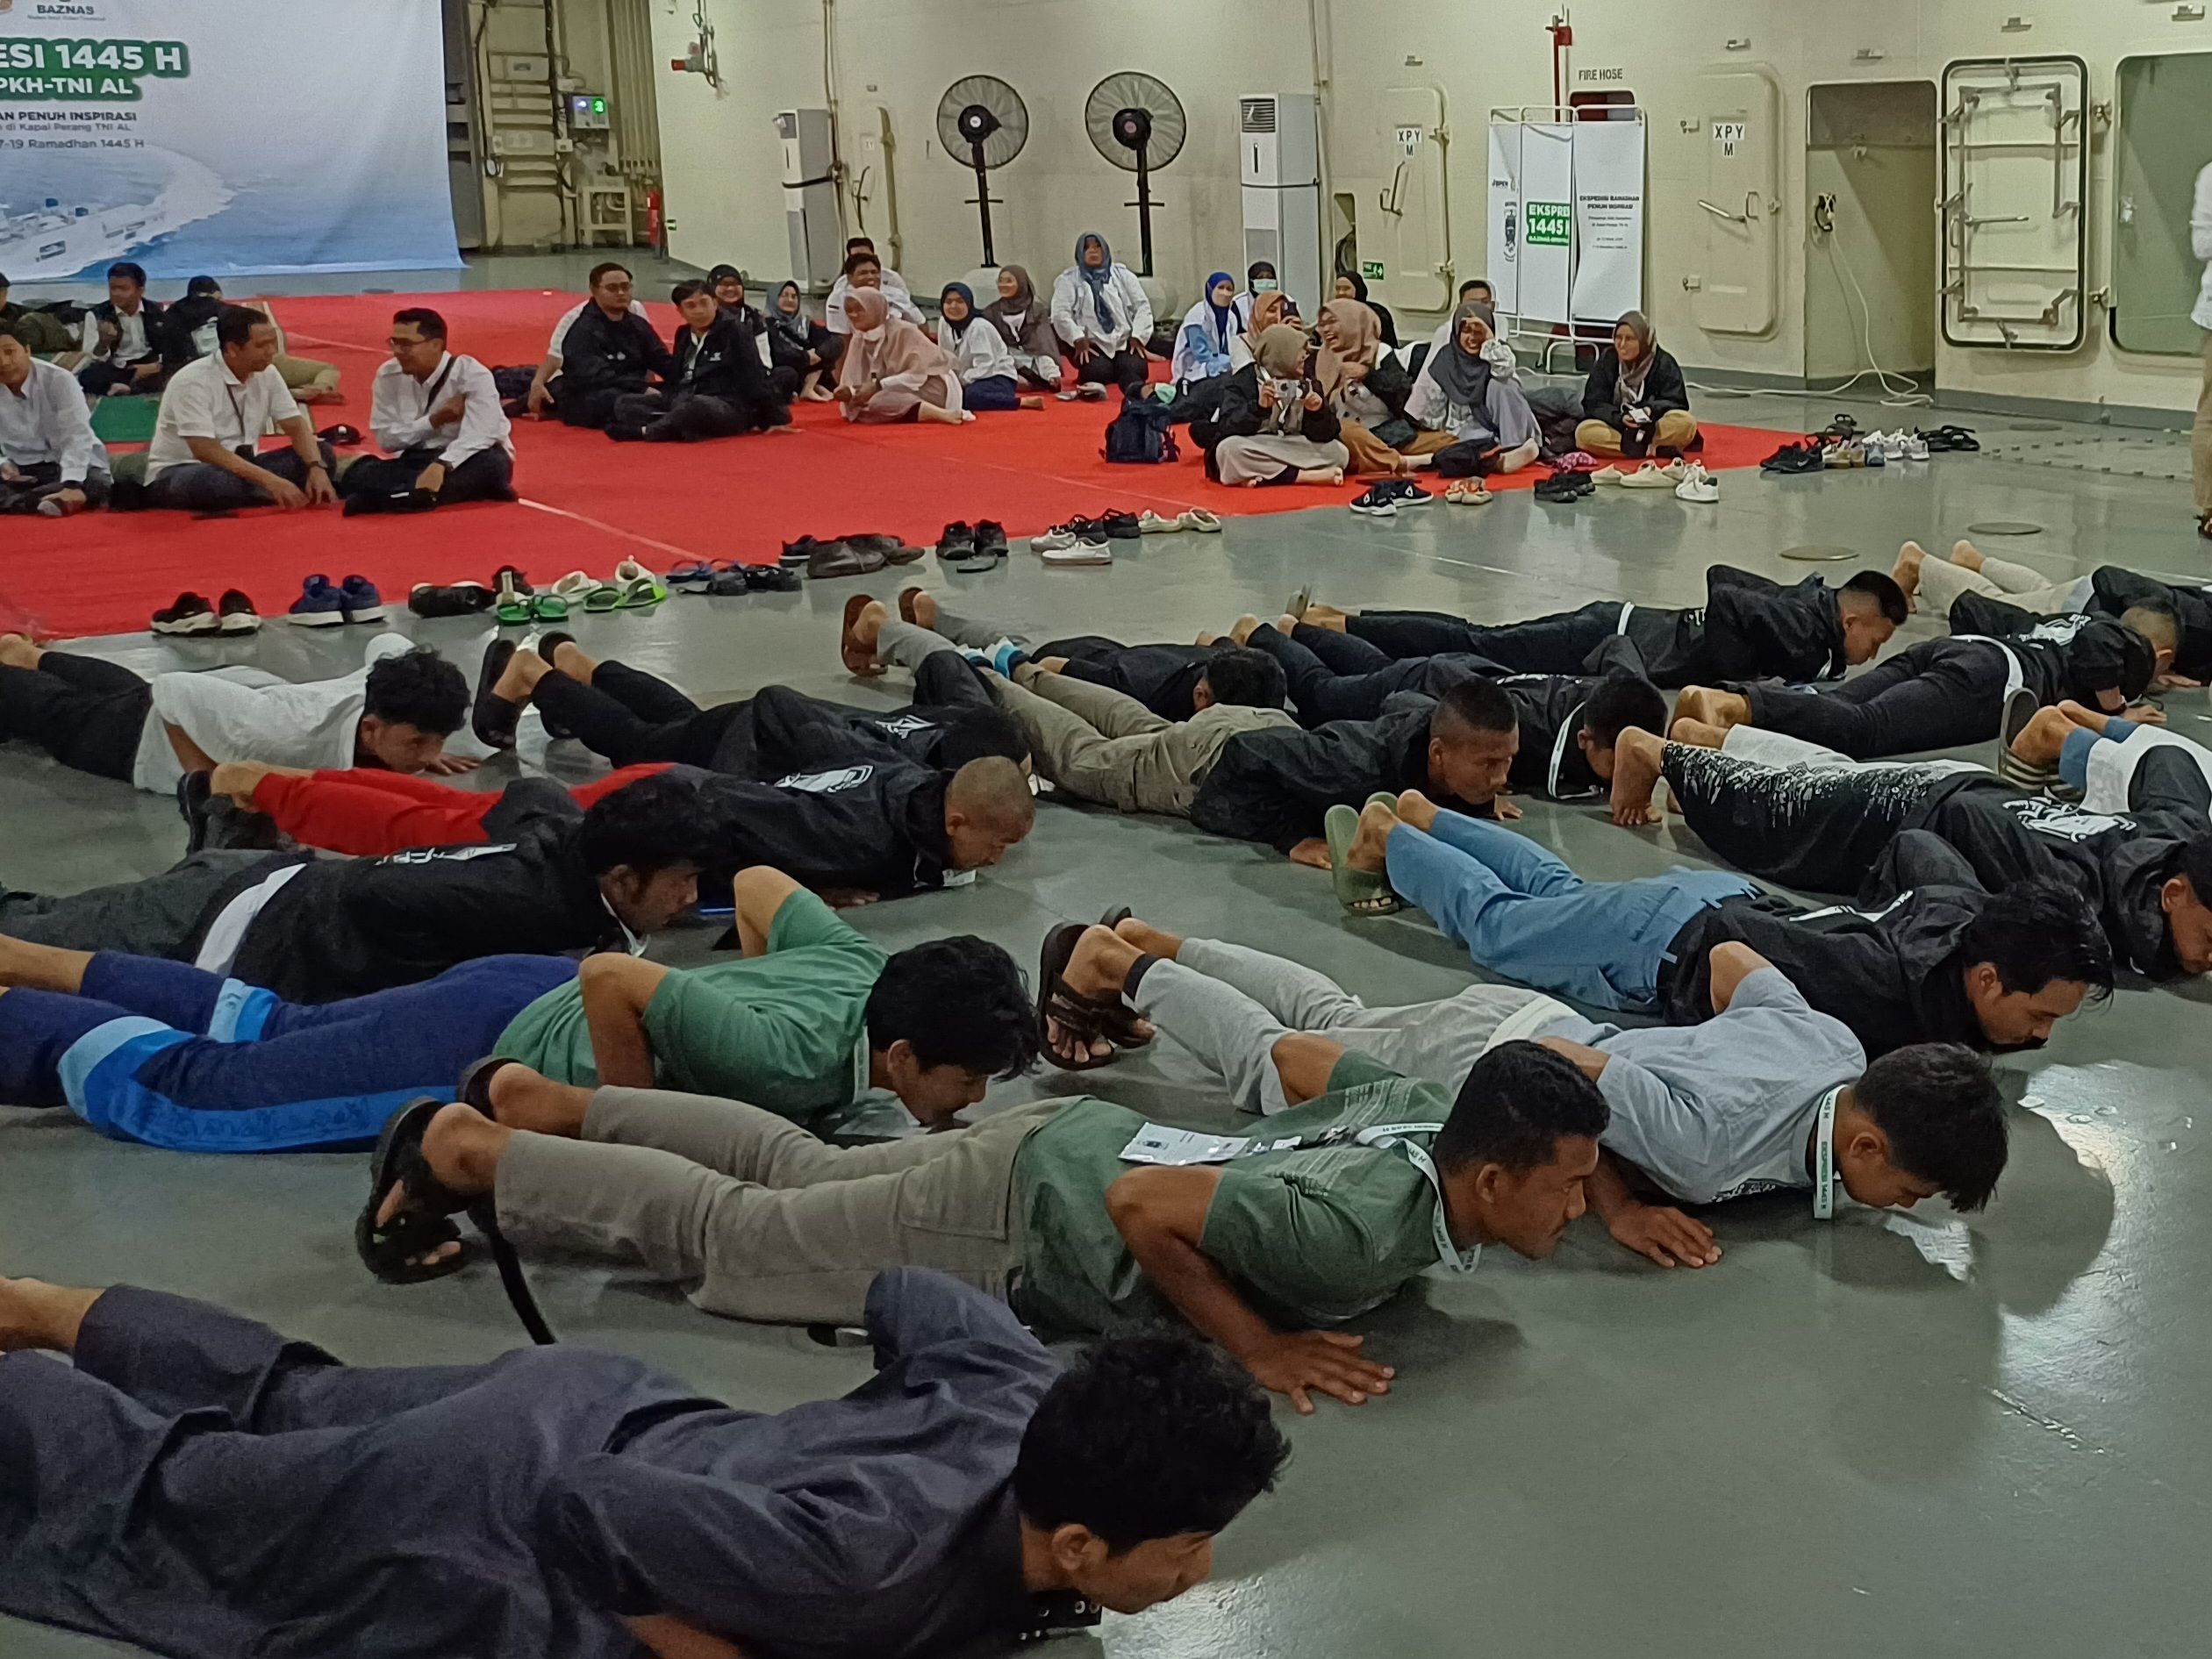 Momen Peserta Sanlat Ekspresi Baznas Diminta “Push Up” Karena Ketiduran saat Ada Seminar